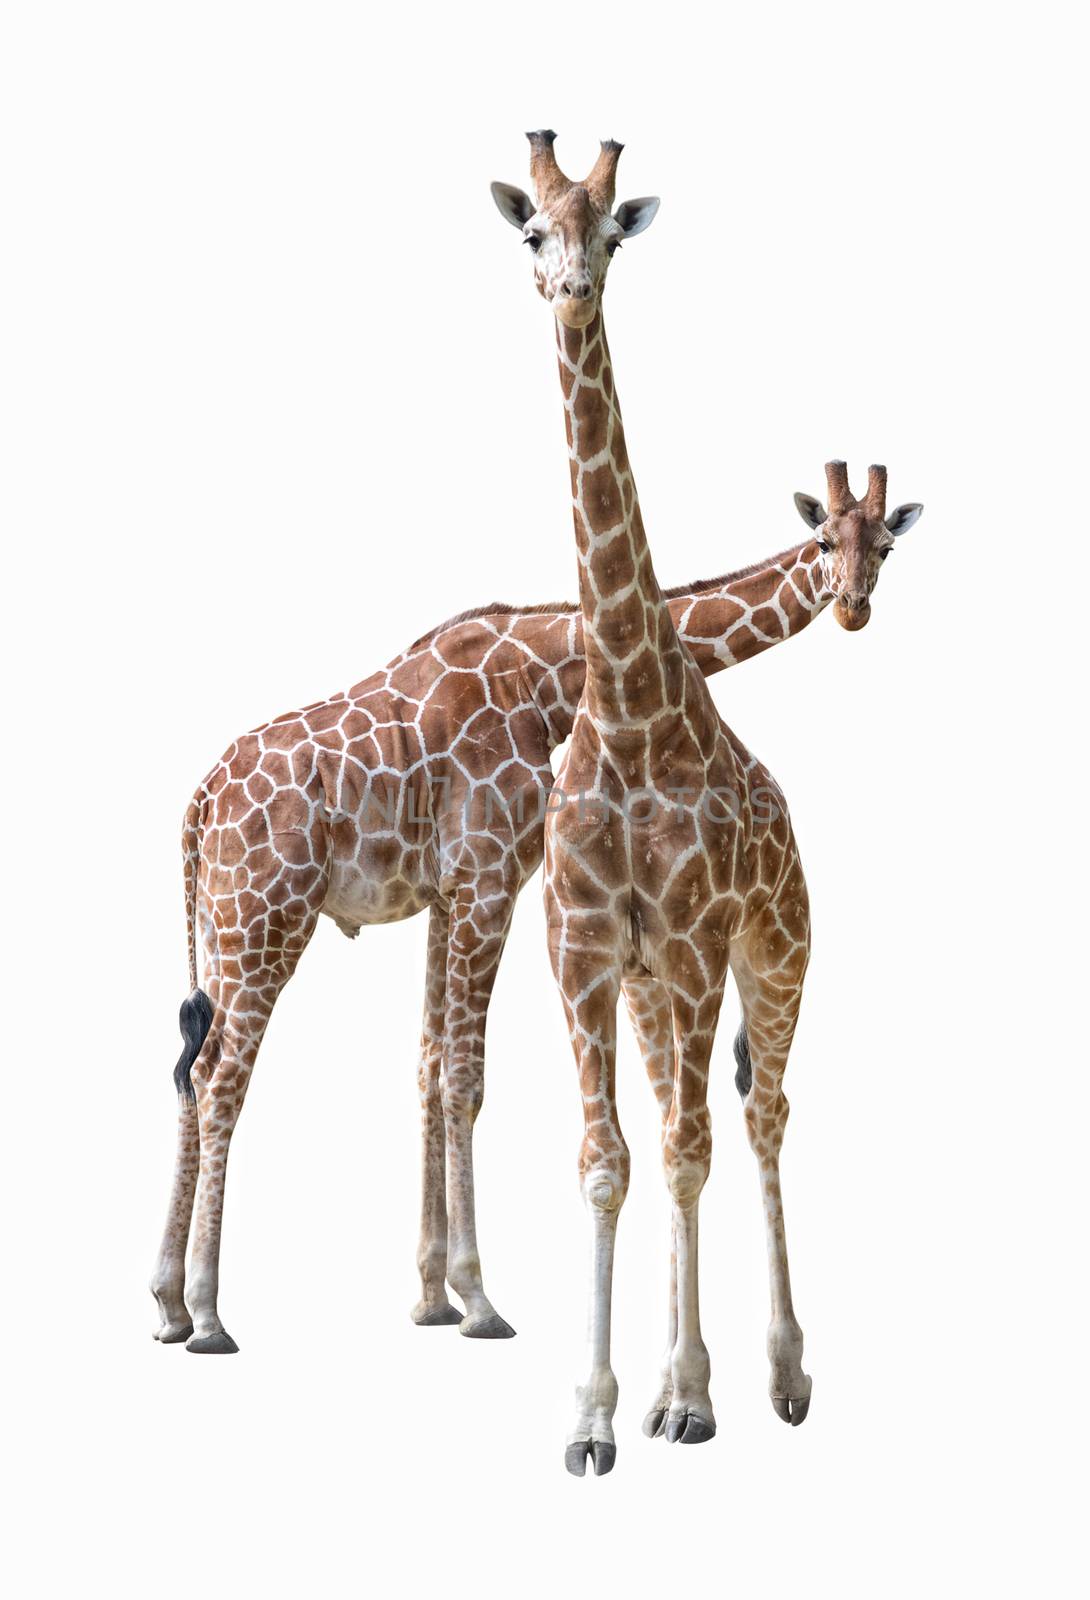 Giraffe young couple by vkstudio